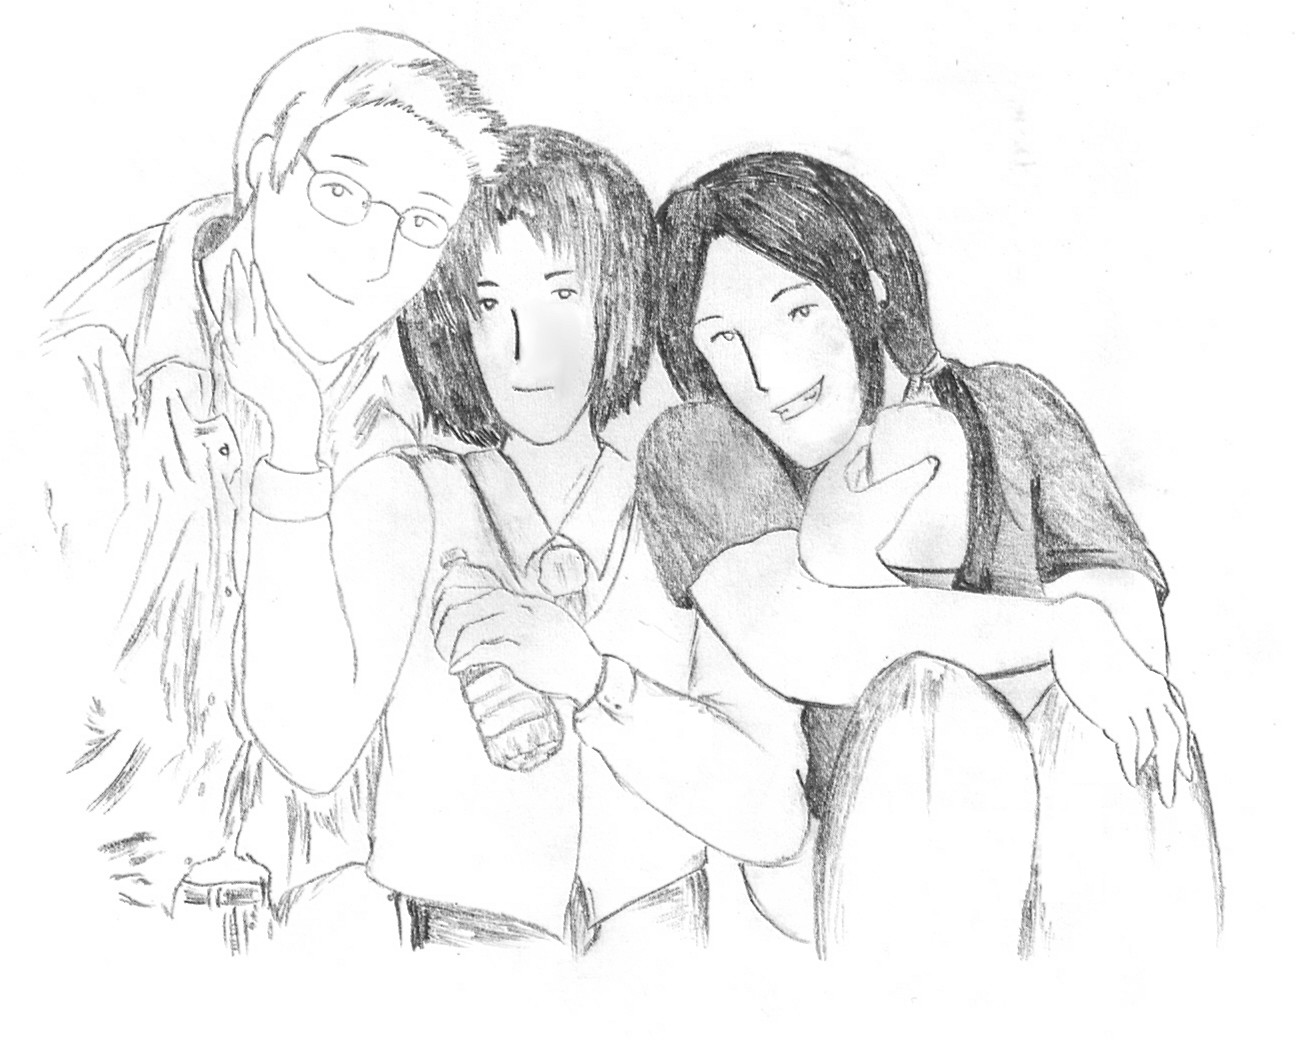 Yoikawa, Mel, and Tanner by Yoikawa